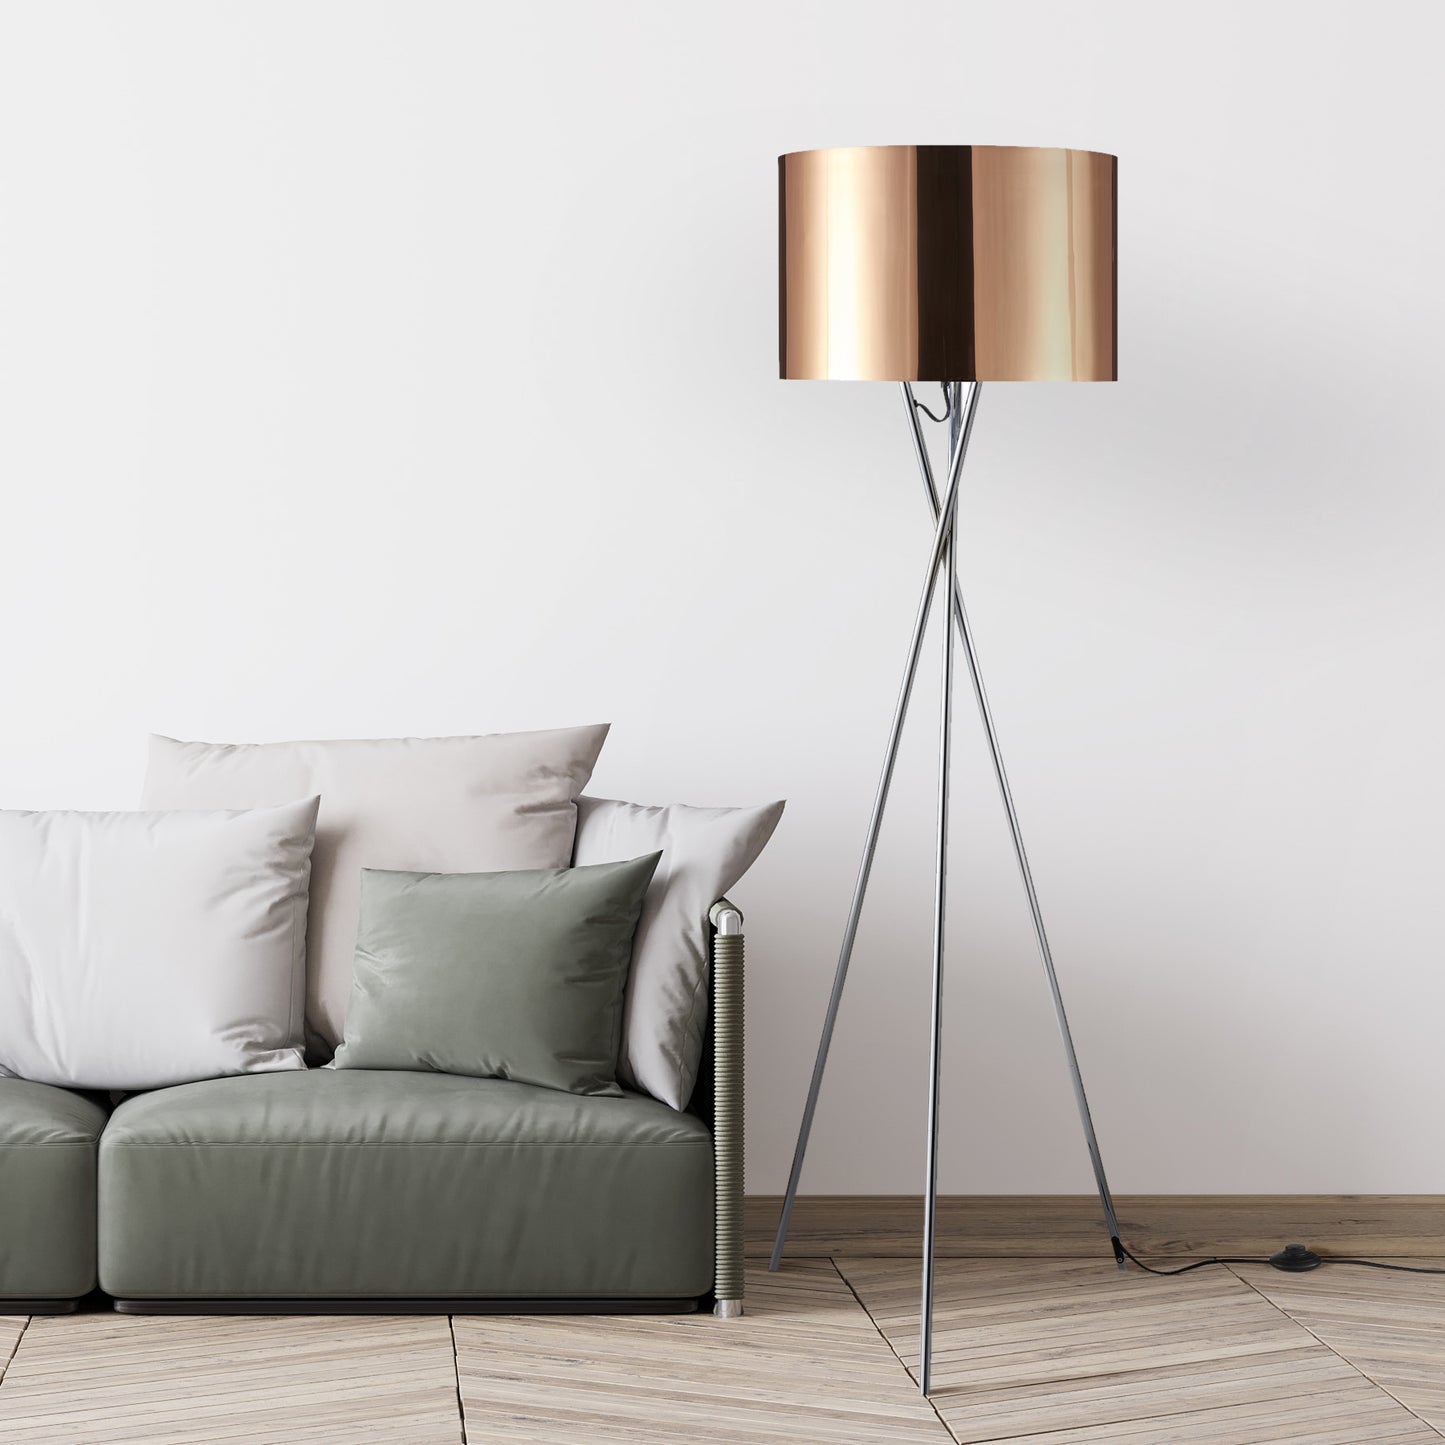 Amlight  62 inch Lisboa Tripod Floor Lamp with Metal Chrome Tripod and Copper Film Shade